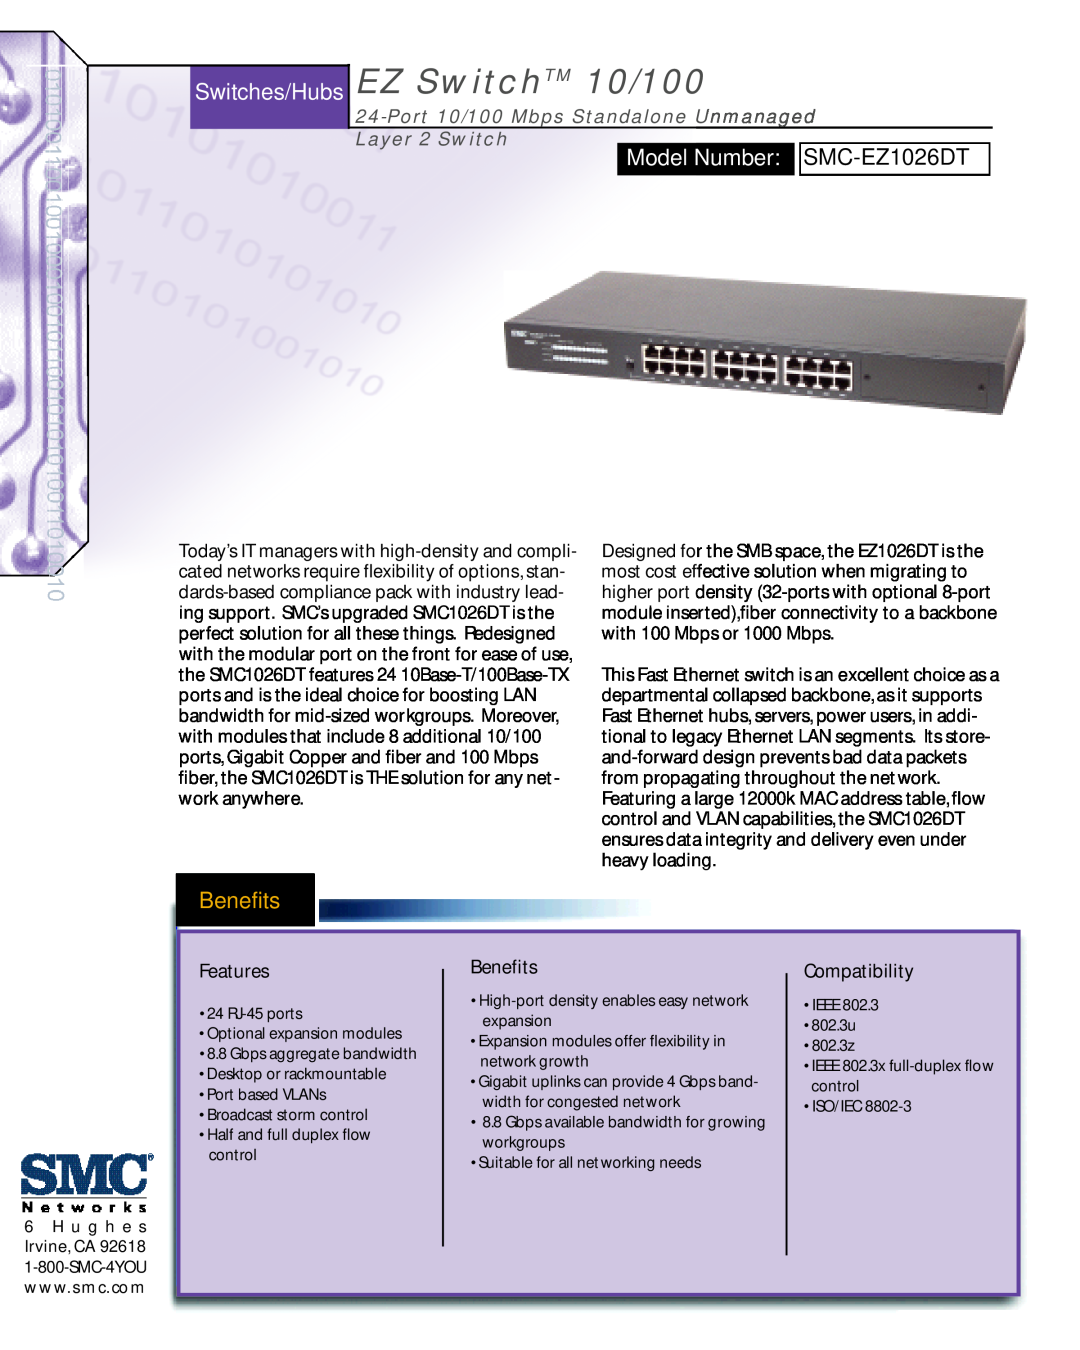 SMC Networks manual Switches/Hubs EZ SwitchTM 10/100, Model Number SMC-EZ1026DT, Benefits 